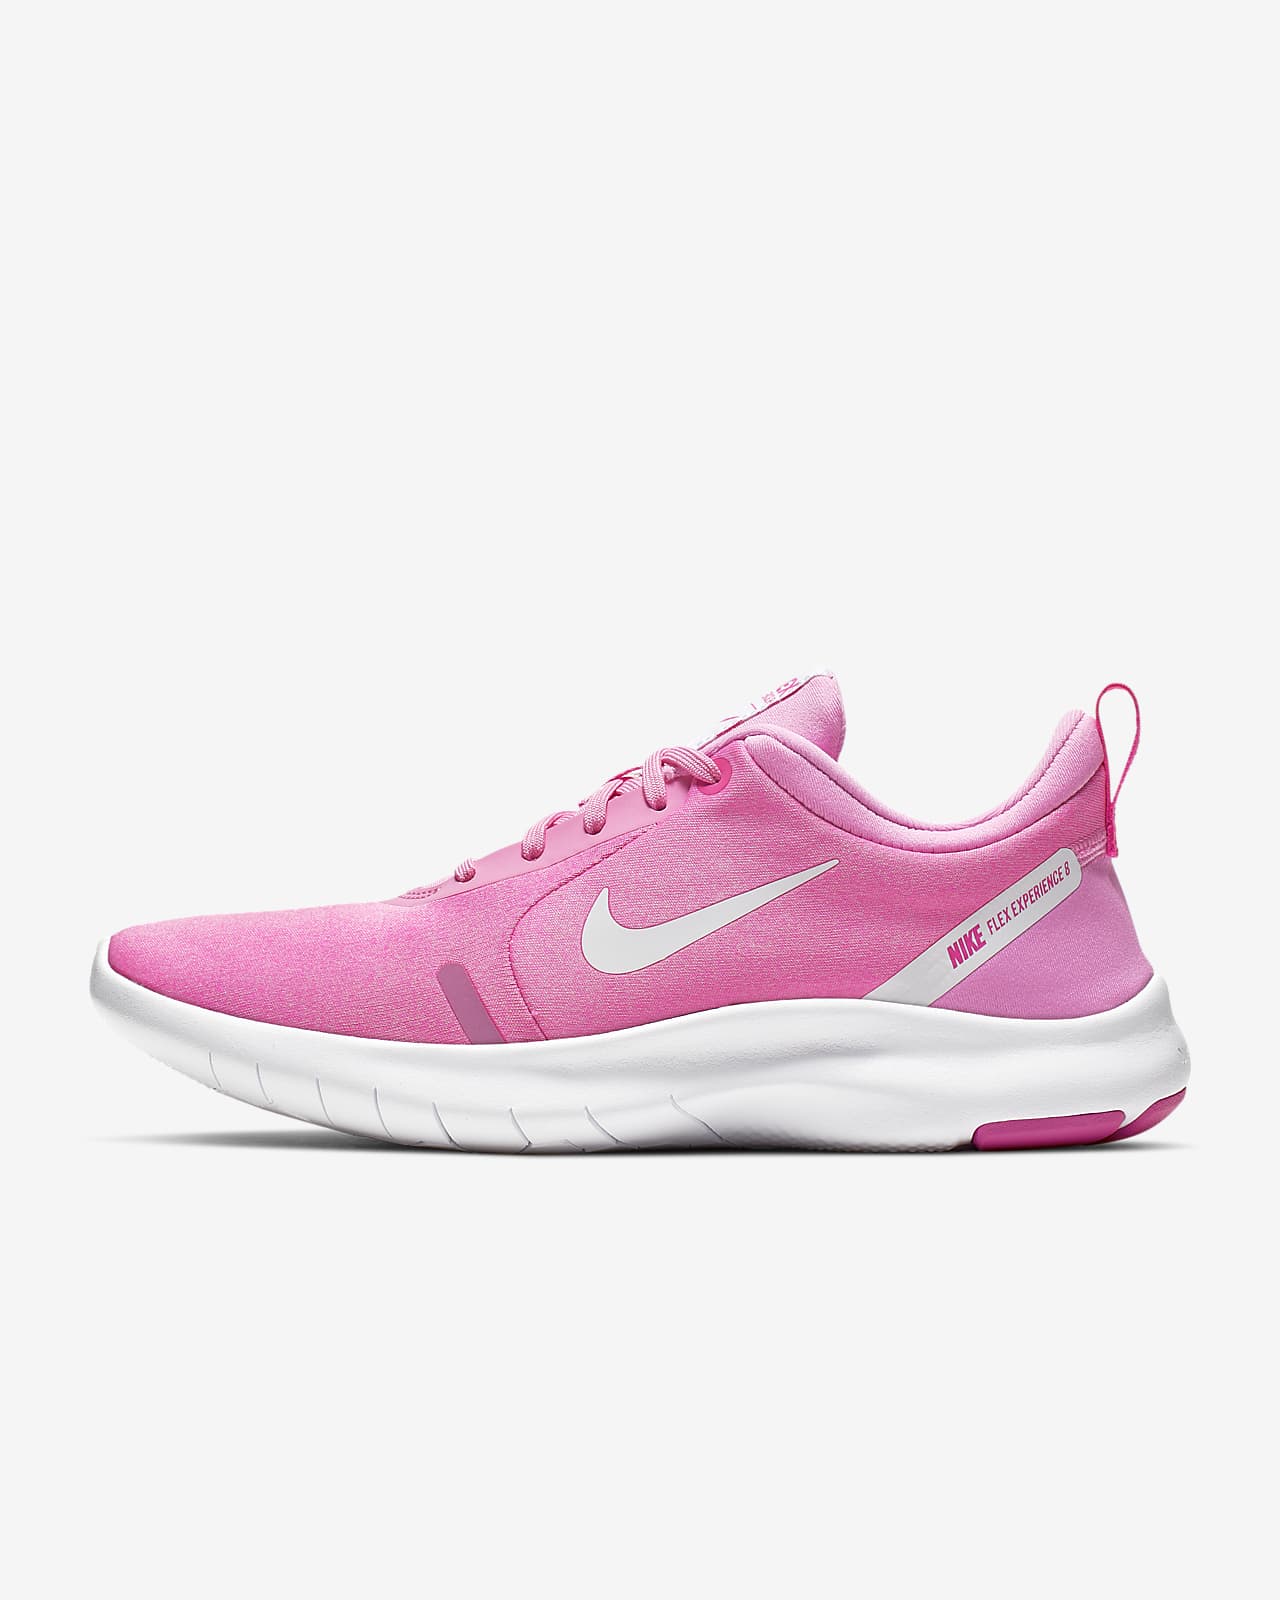 Nike Flex Experience RN 8 Women's Running Shoe